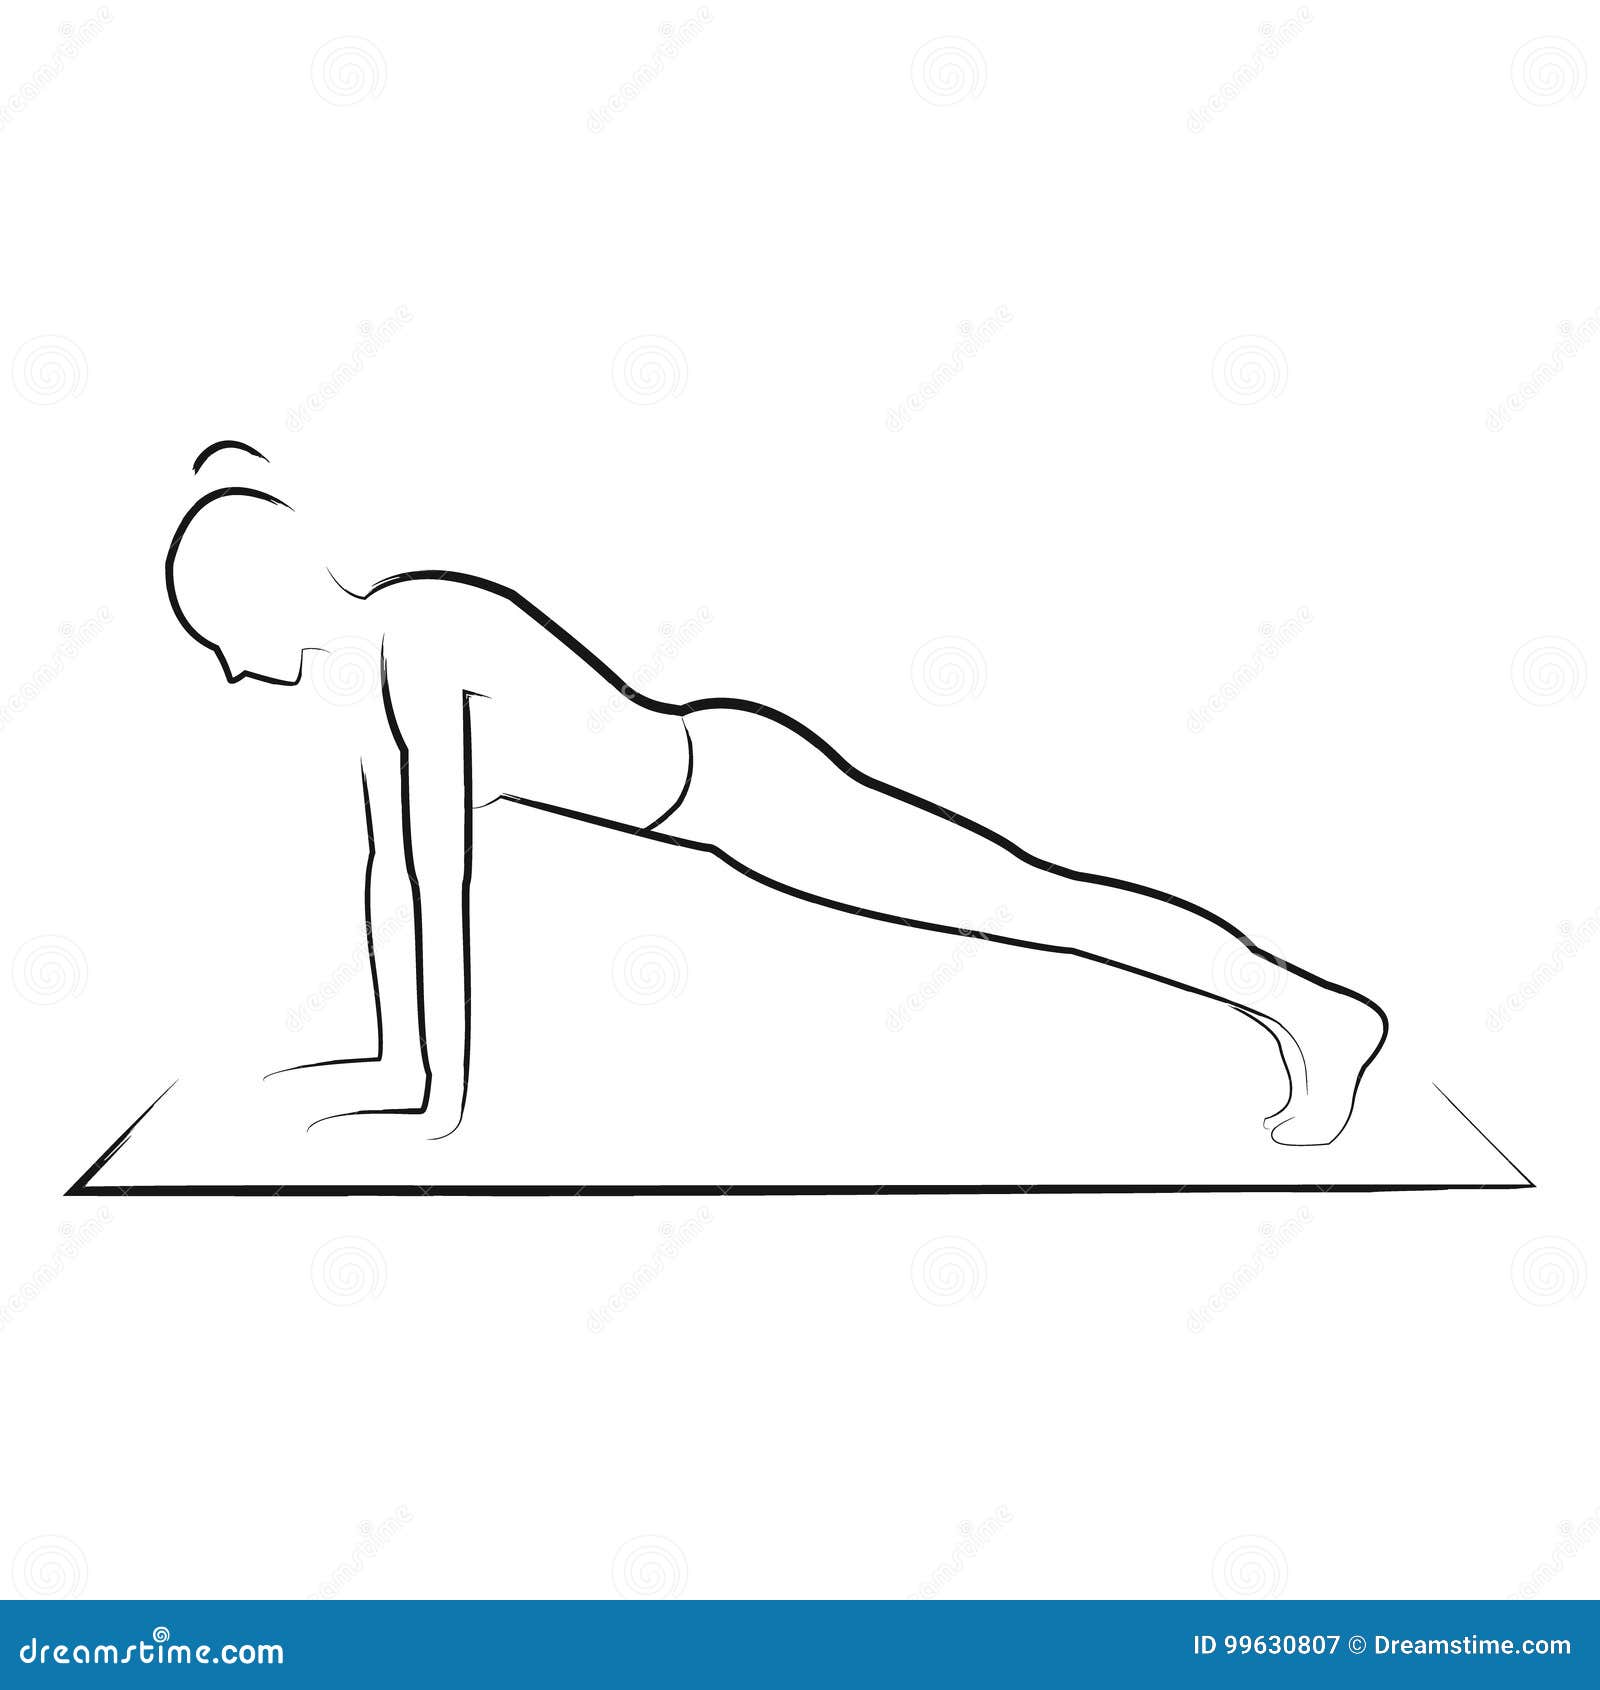 The Plank Pose(Phalakasana): How to Do and Benefits - Fitsri